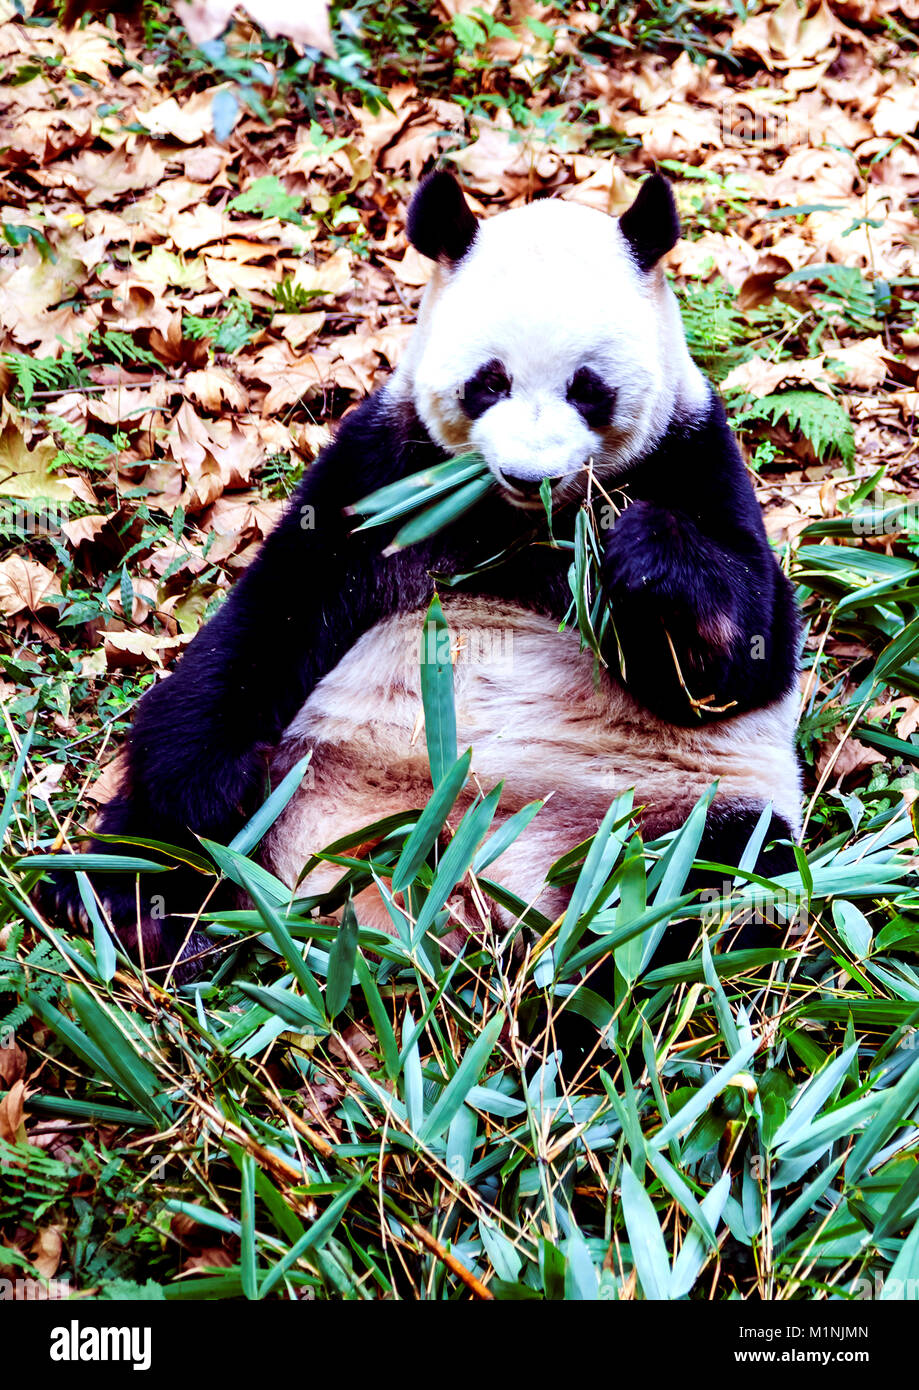 Panda munching on bamboo shoots at Chengdu Research Base of Giant Panda Breeding in China Stock Photo